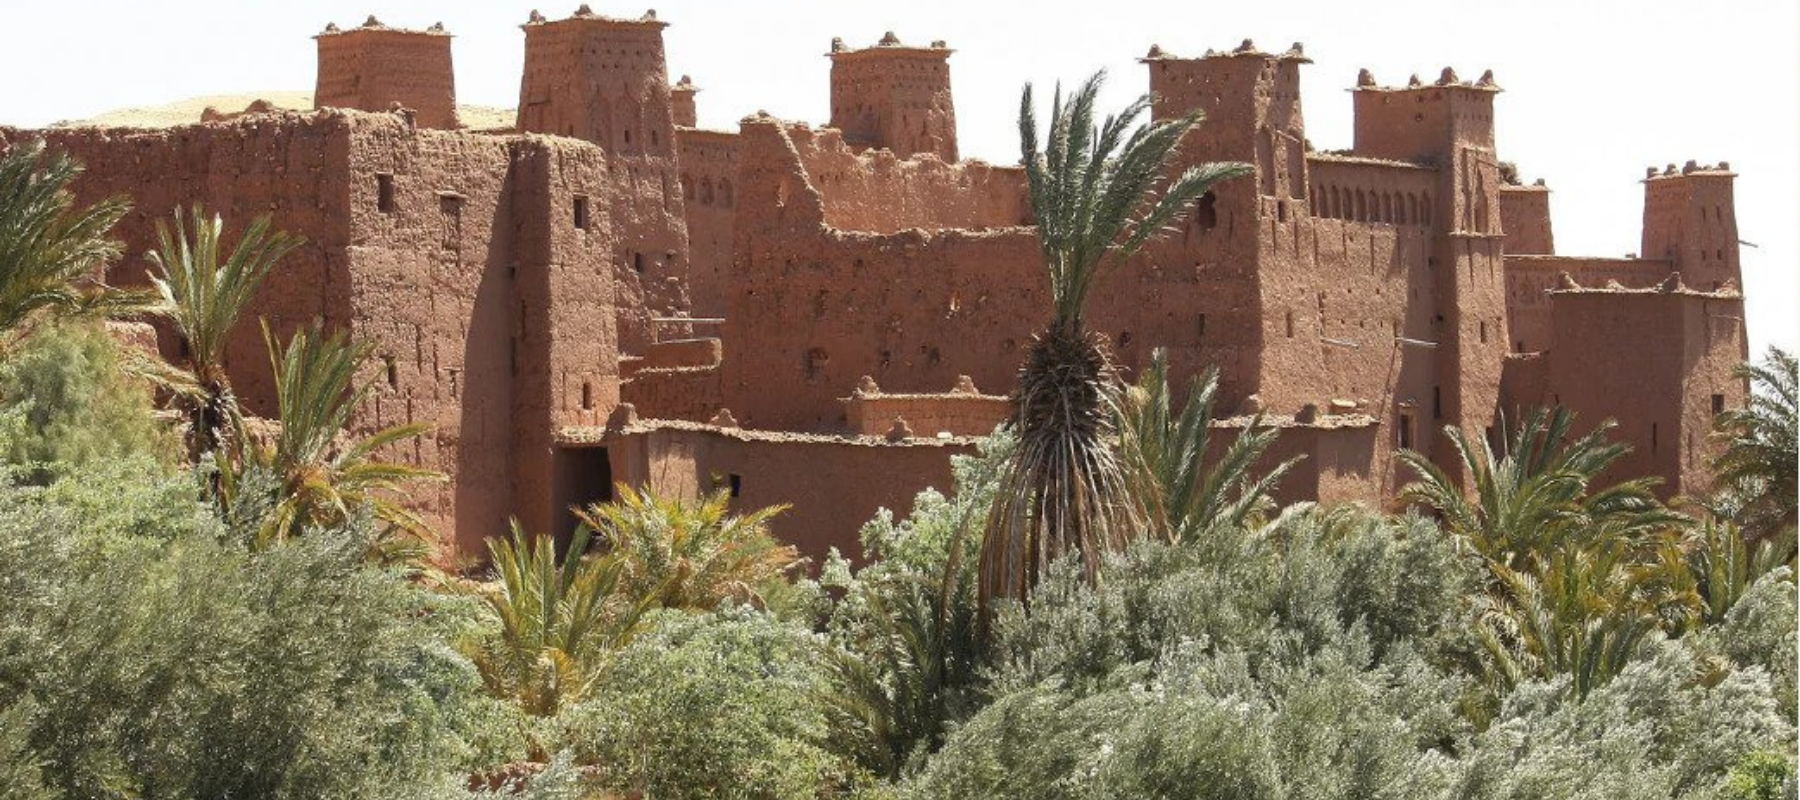 Kasbah Aït Benhaddou, near Ouarzazate